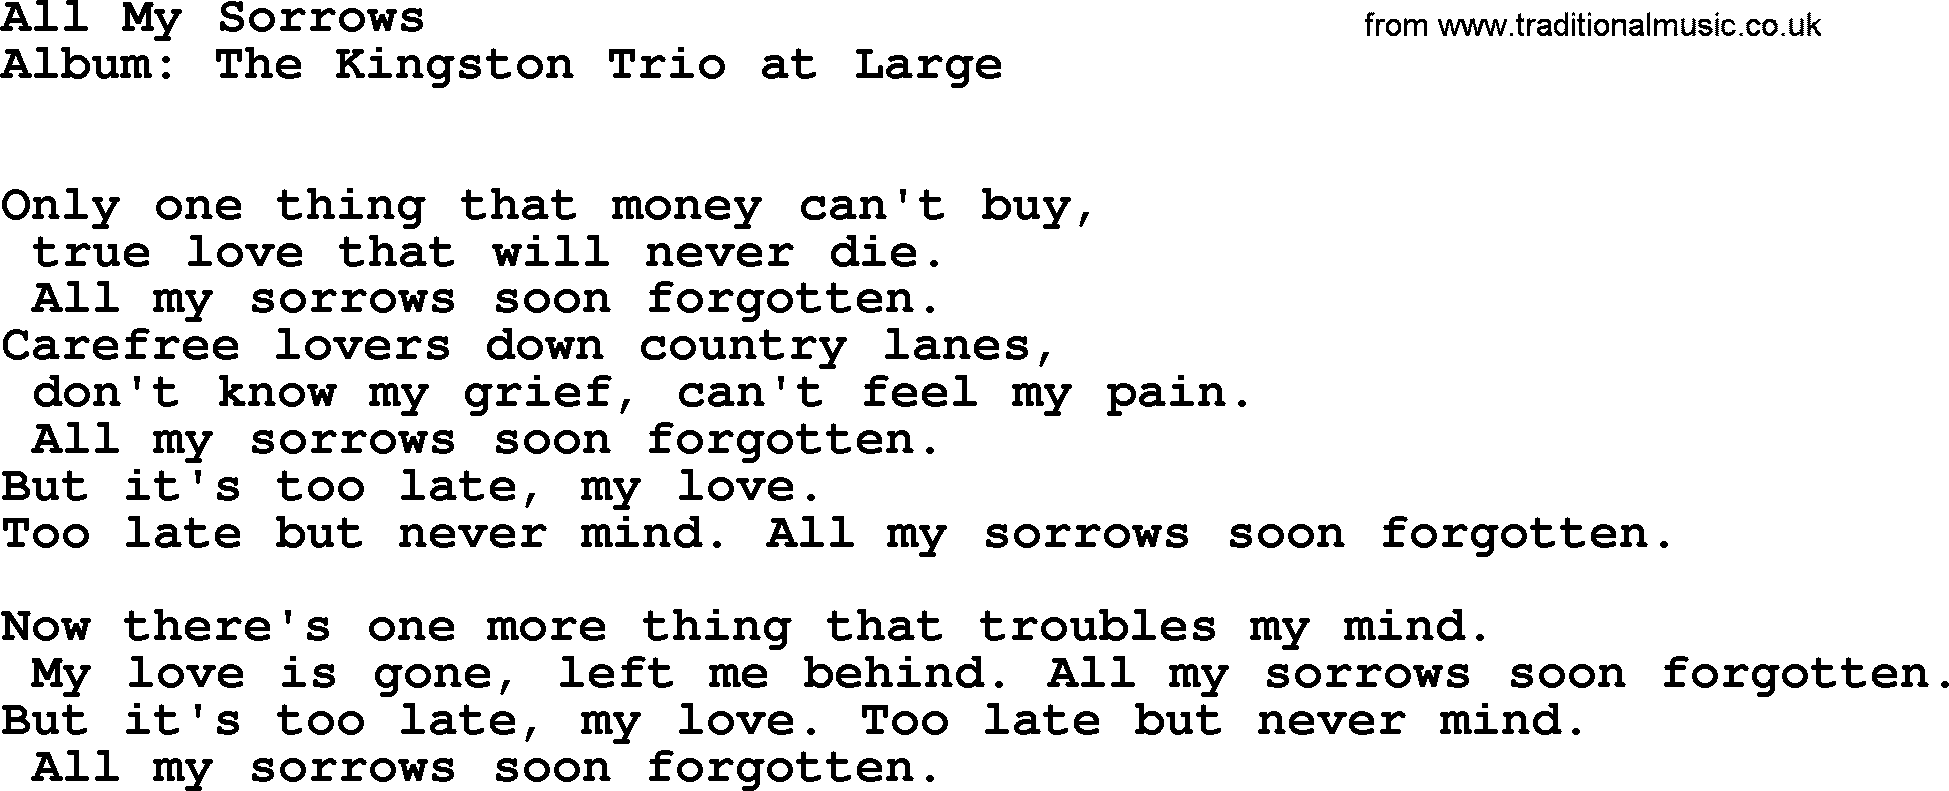 Kingston Trio song All My Sorrows, lyrics